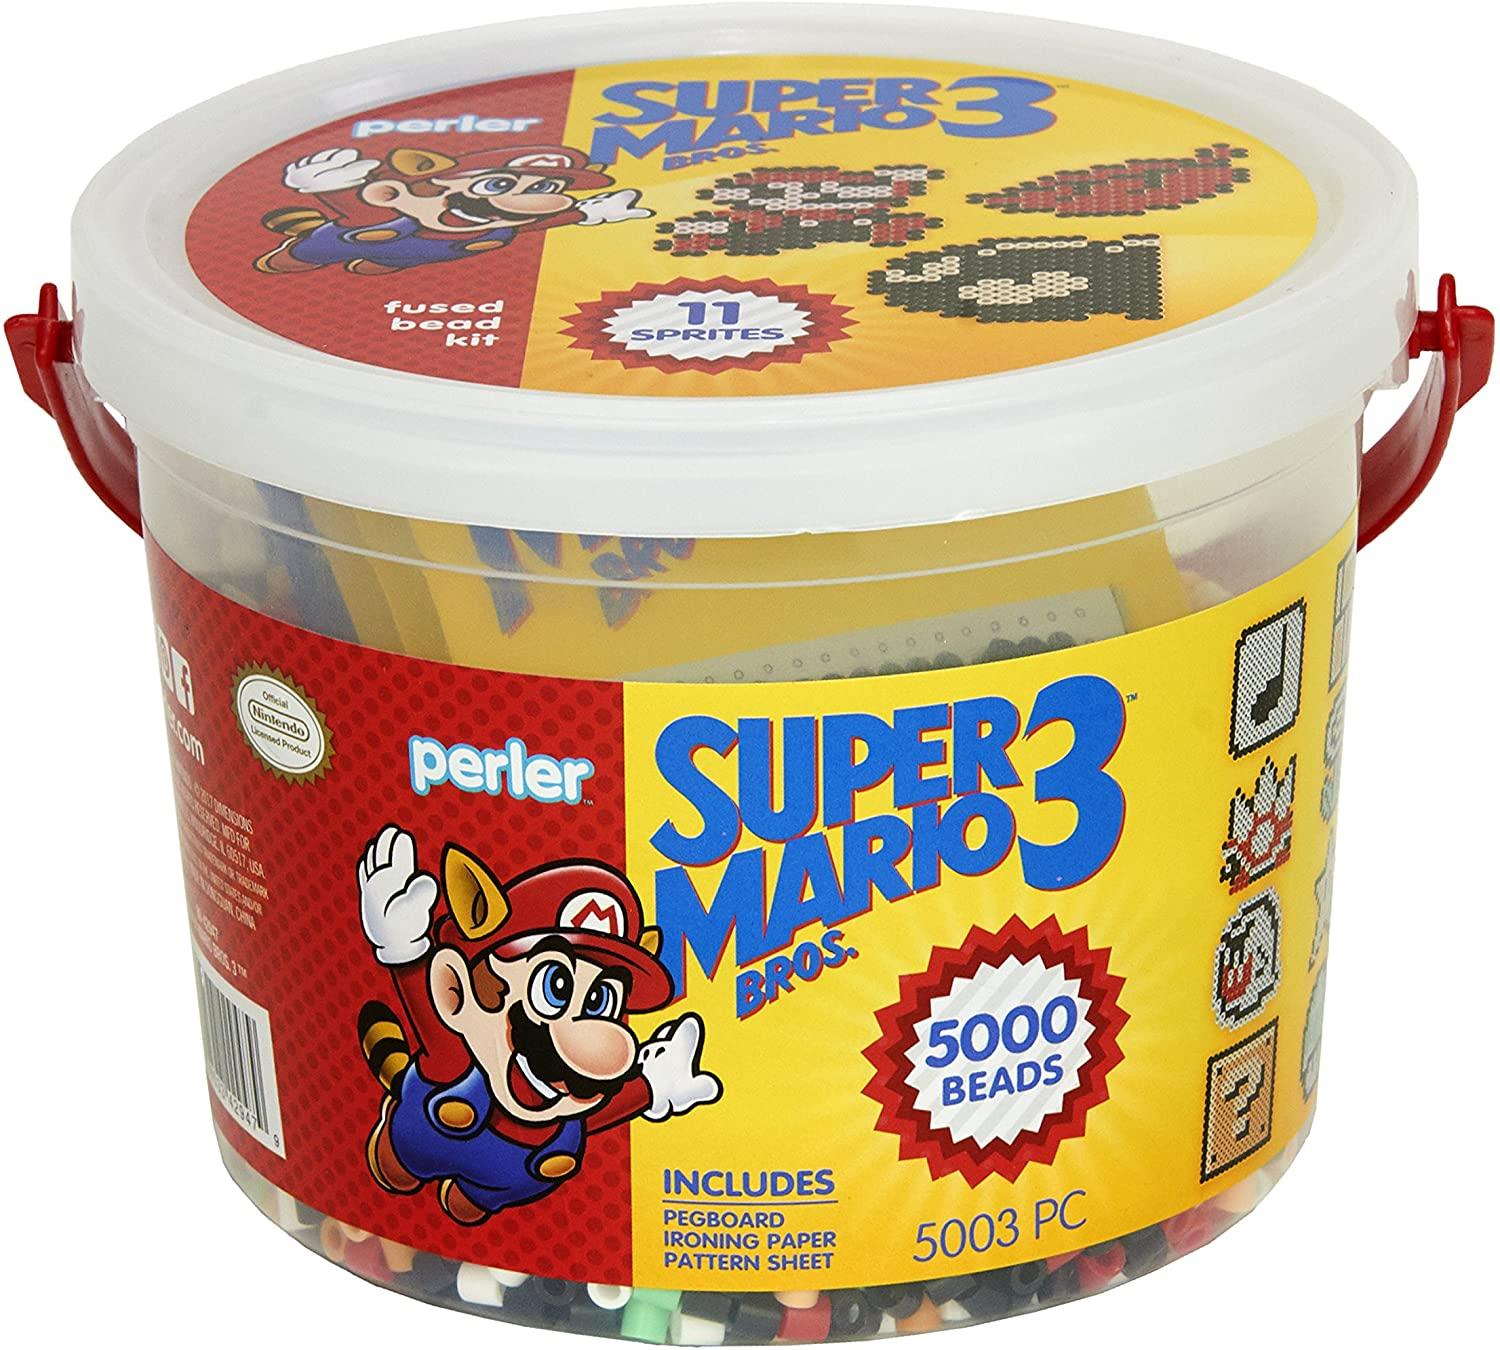 5003-Piece Super Mario 3 Perler Craft Bead Bucket Activity Kit for $9.95